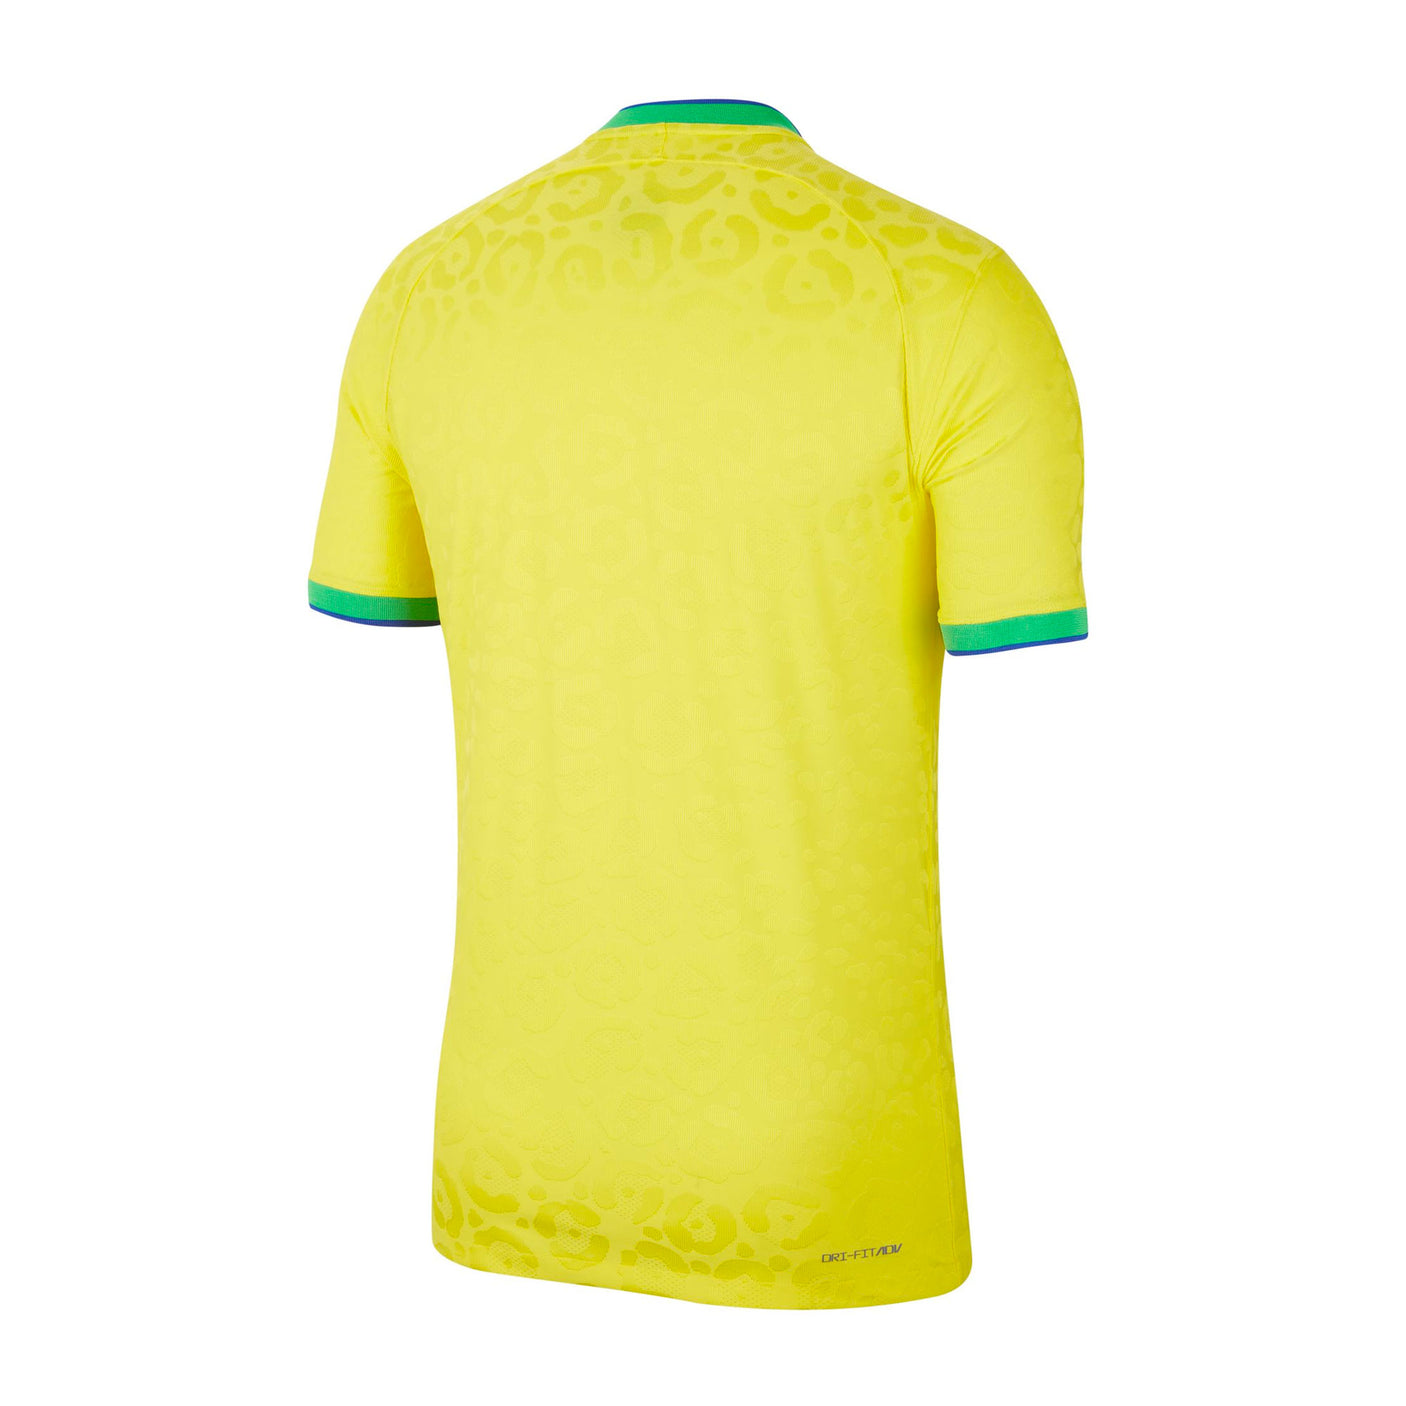 Nike Brazil Soccer Jersey Authentic Dri-Fit Yellow Green Brasil Football